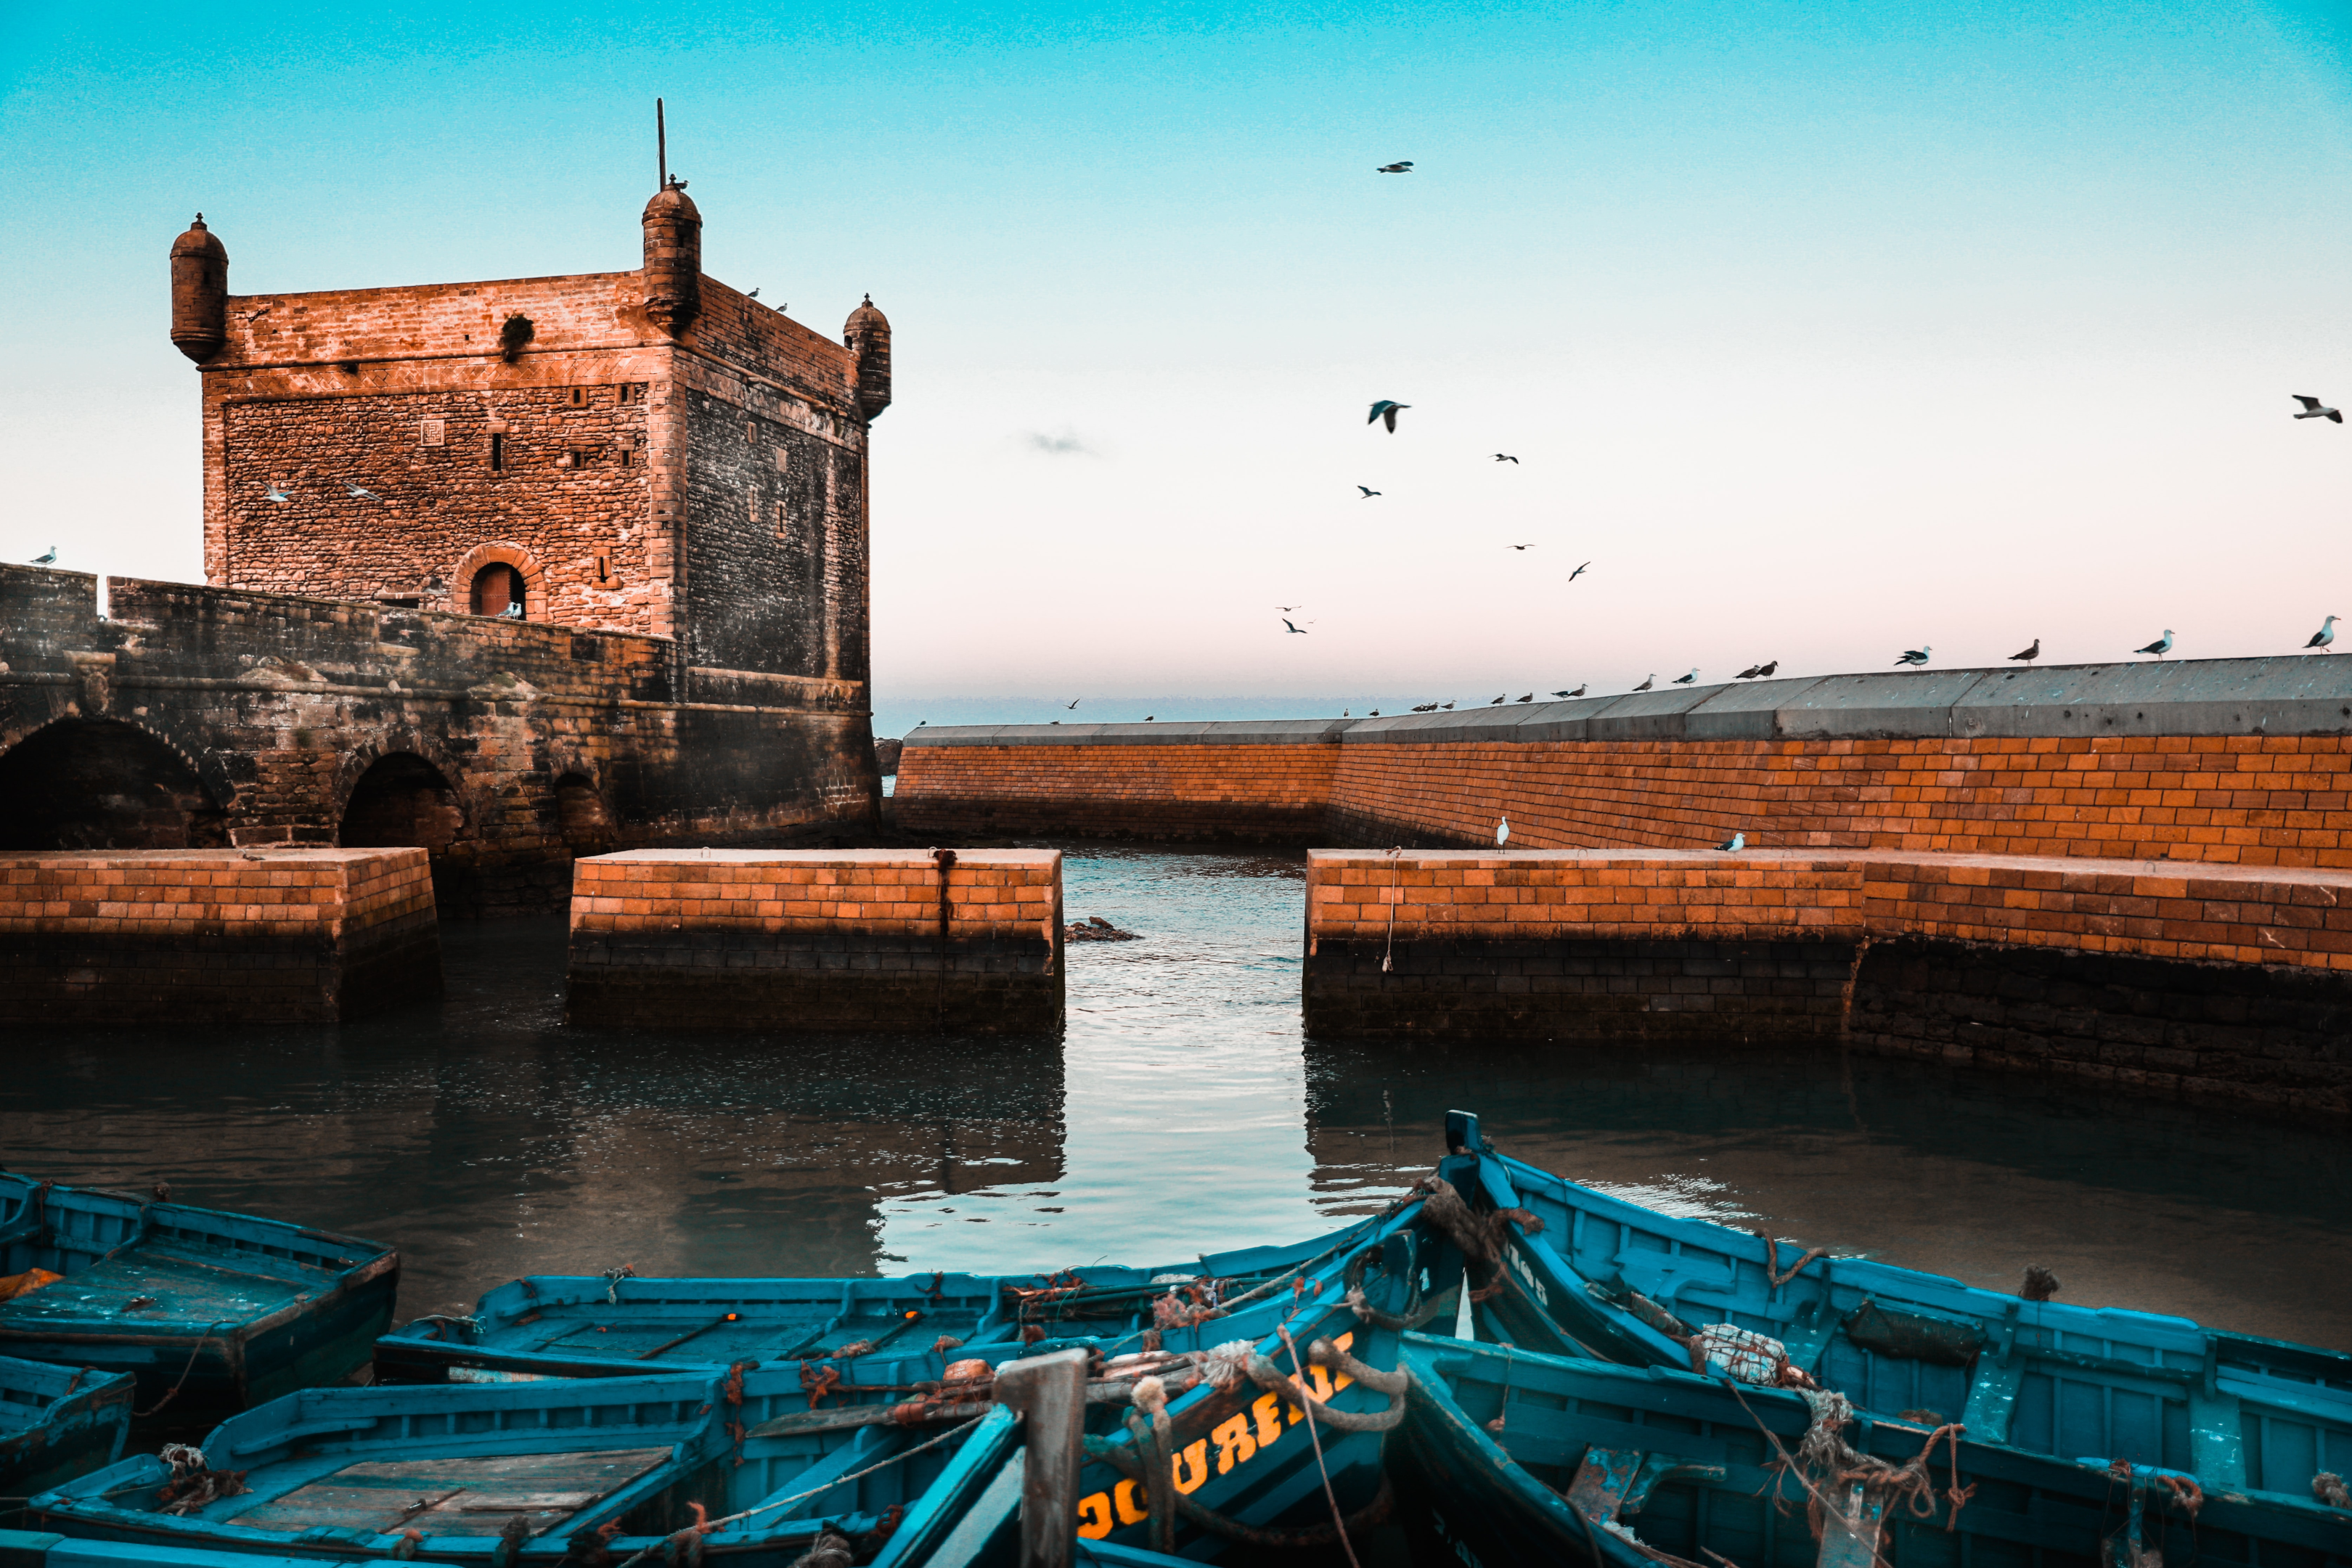 Game of Thrones Filming Location: Essaouira